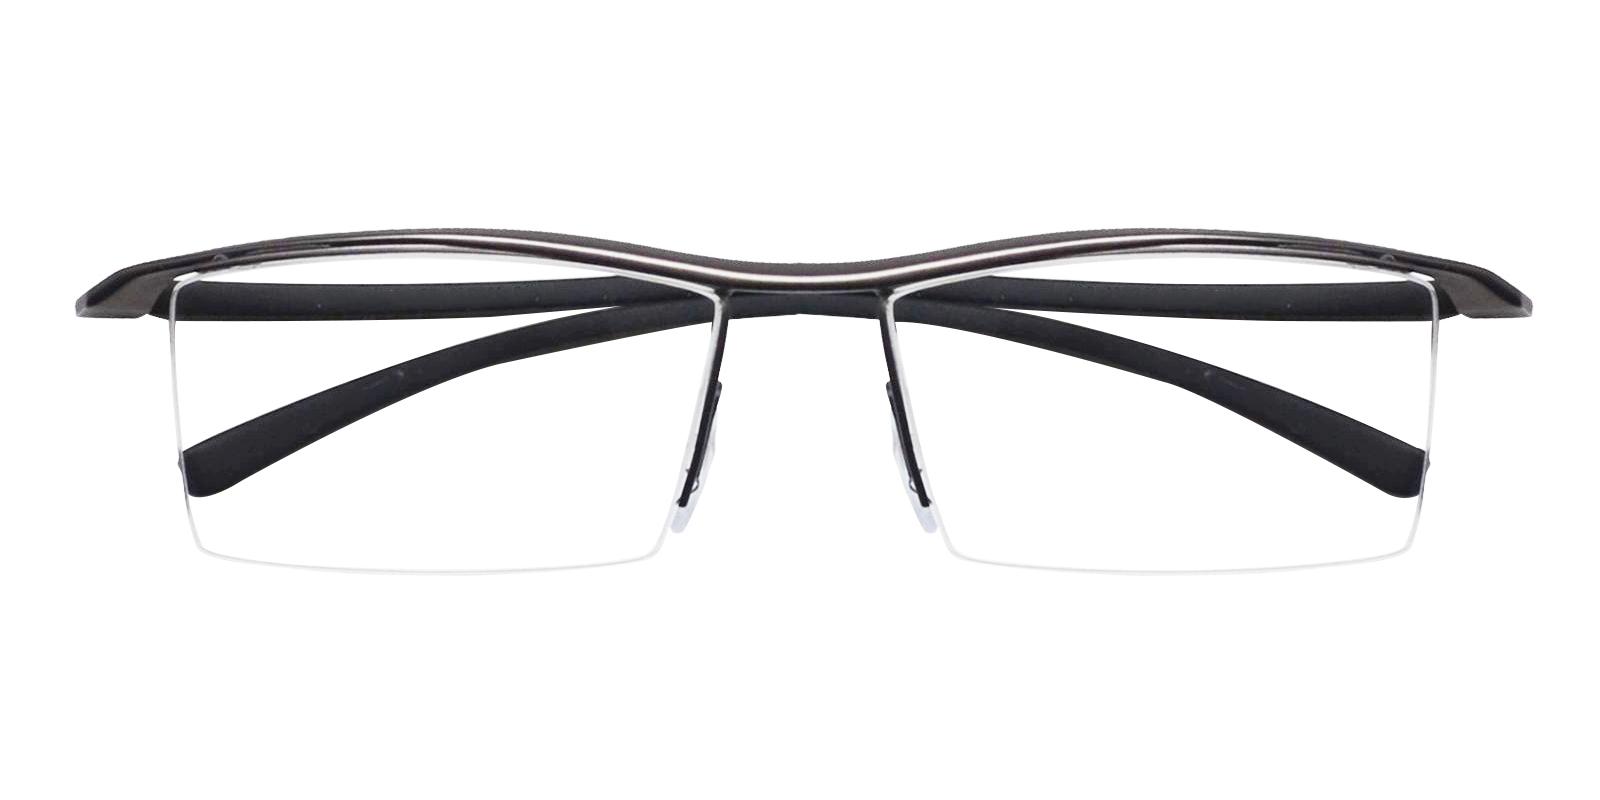 Thomas Gun Metal Eyeglasses , NosePads Frames from ABBE Glasses